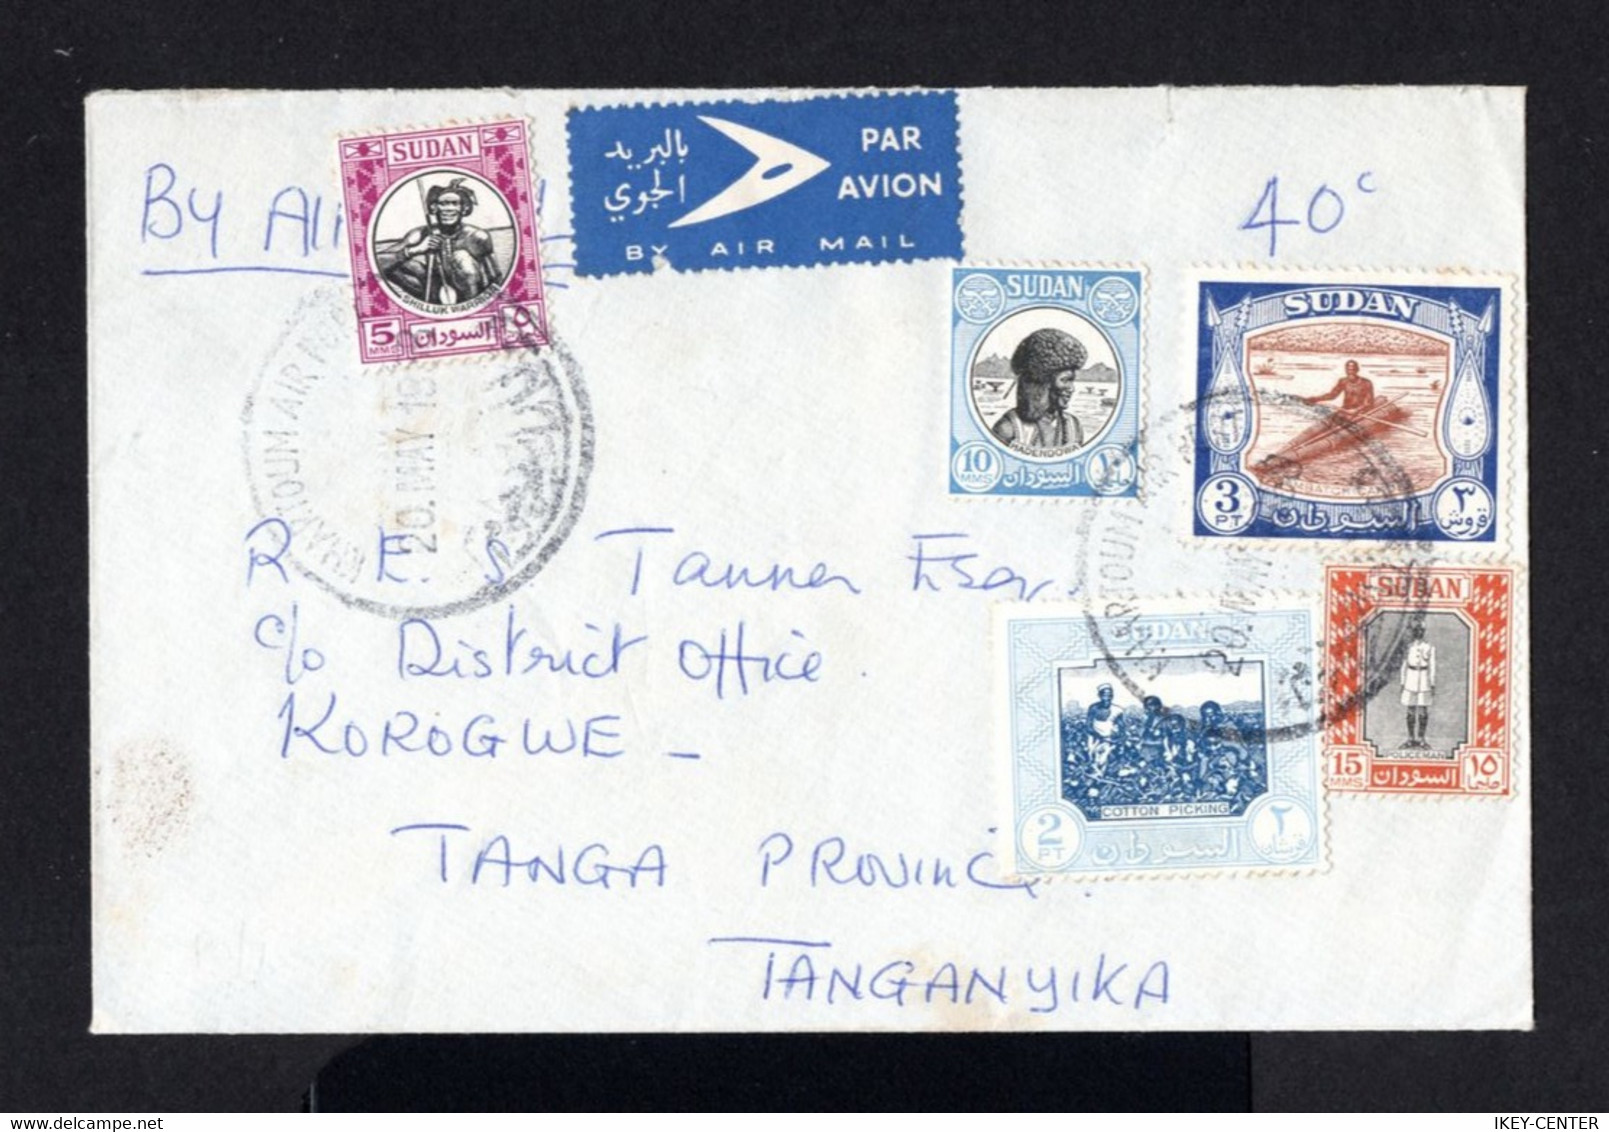 S4836-SUDAN-AIRMAIL COVER KHARTOUM To TANGA (tanganyika).1958.Enveloppe AERIEN SOUDAN - Südsudan